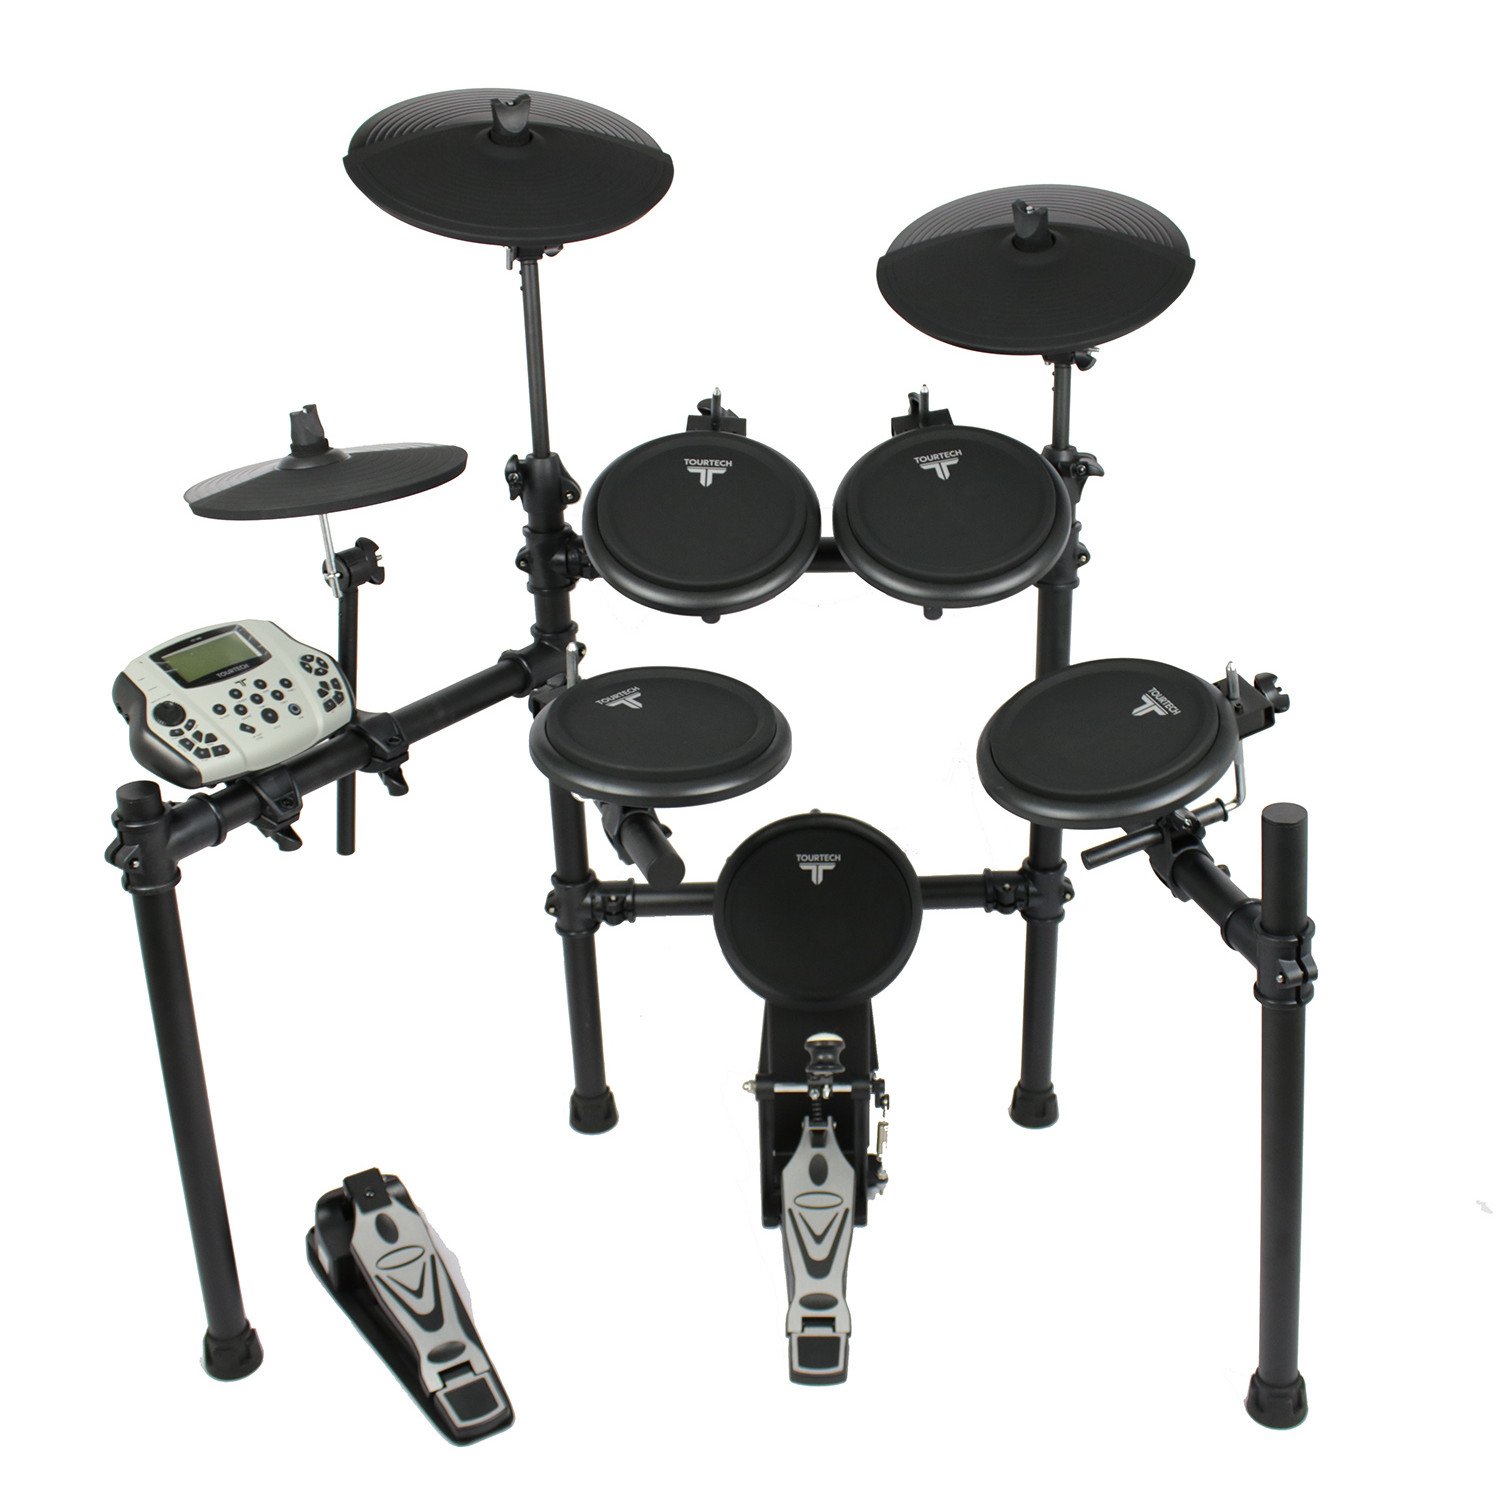 Shop and Buy TourTech Electronic Drum Kit TT-16S Online on Irukka